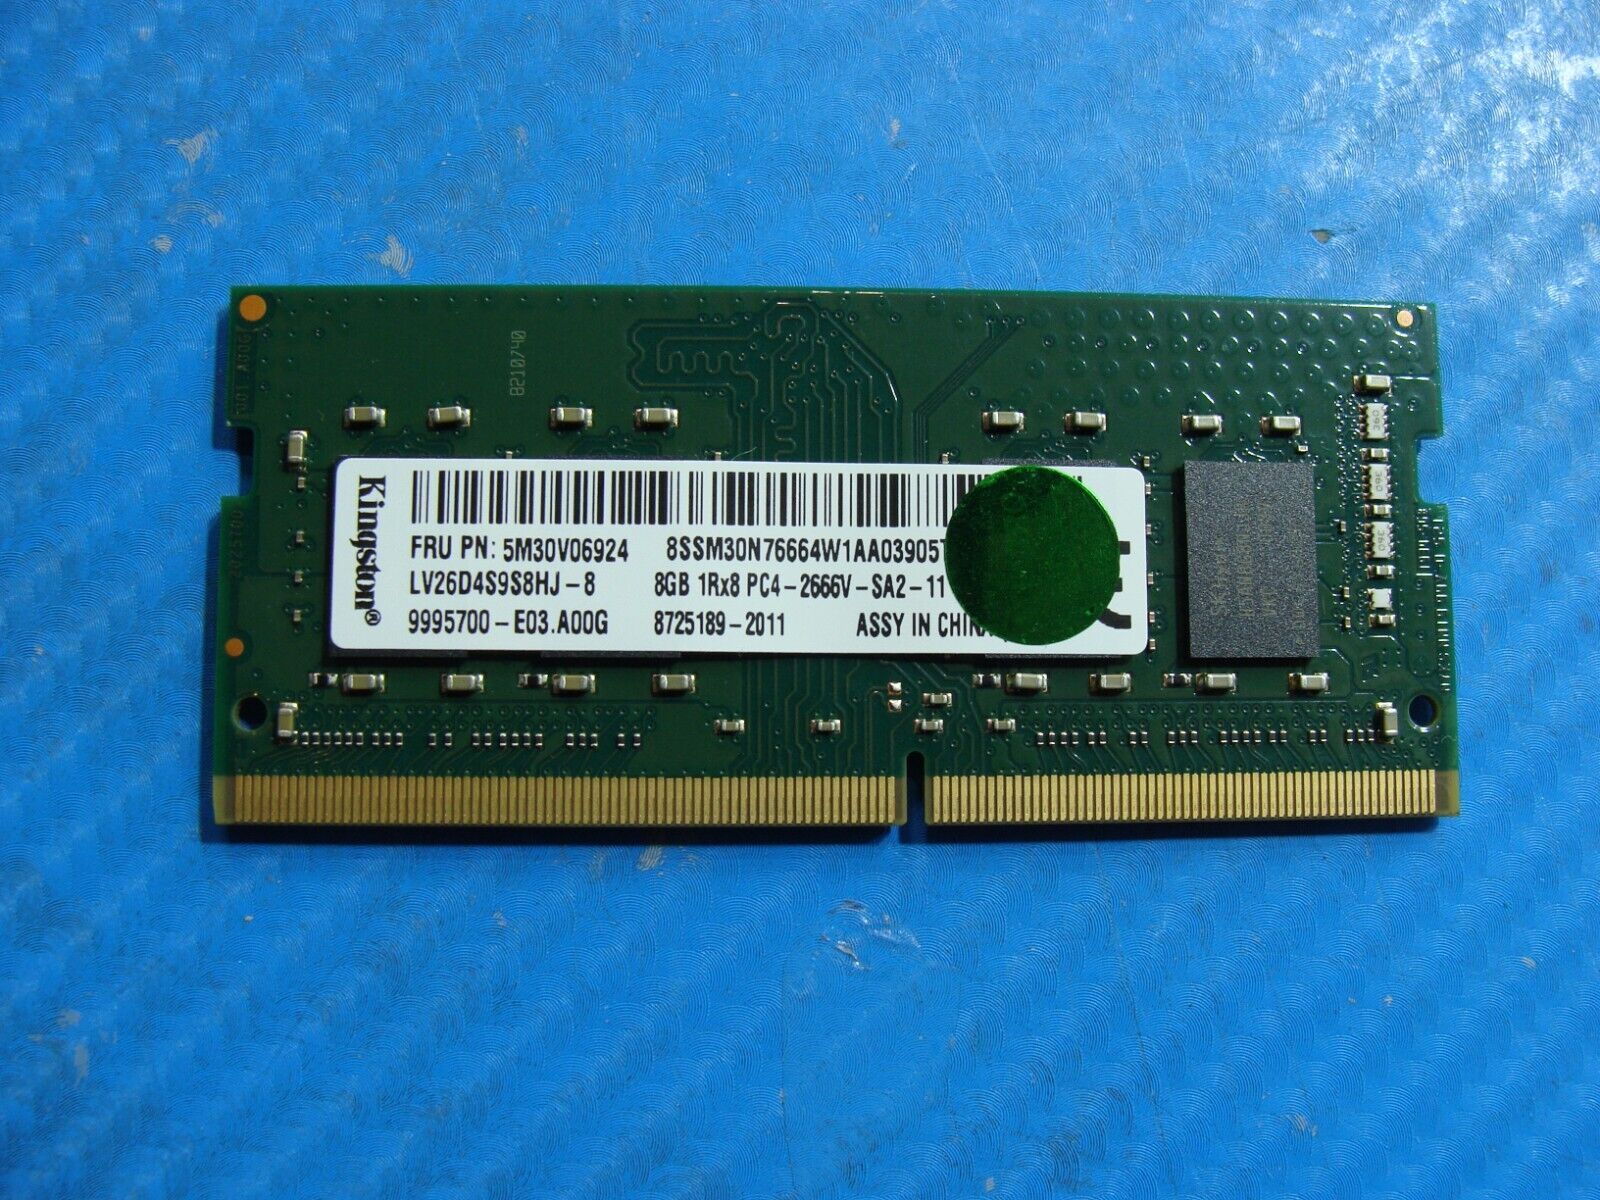 Lenovo Y540-15IRH 81SX Kingston 8GB 1Rx8 PC4-2666V Memory RAM SO-DIMM 5M30V06924